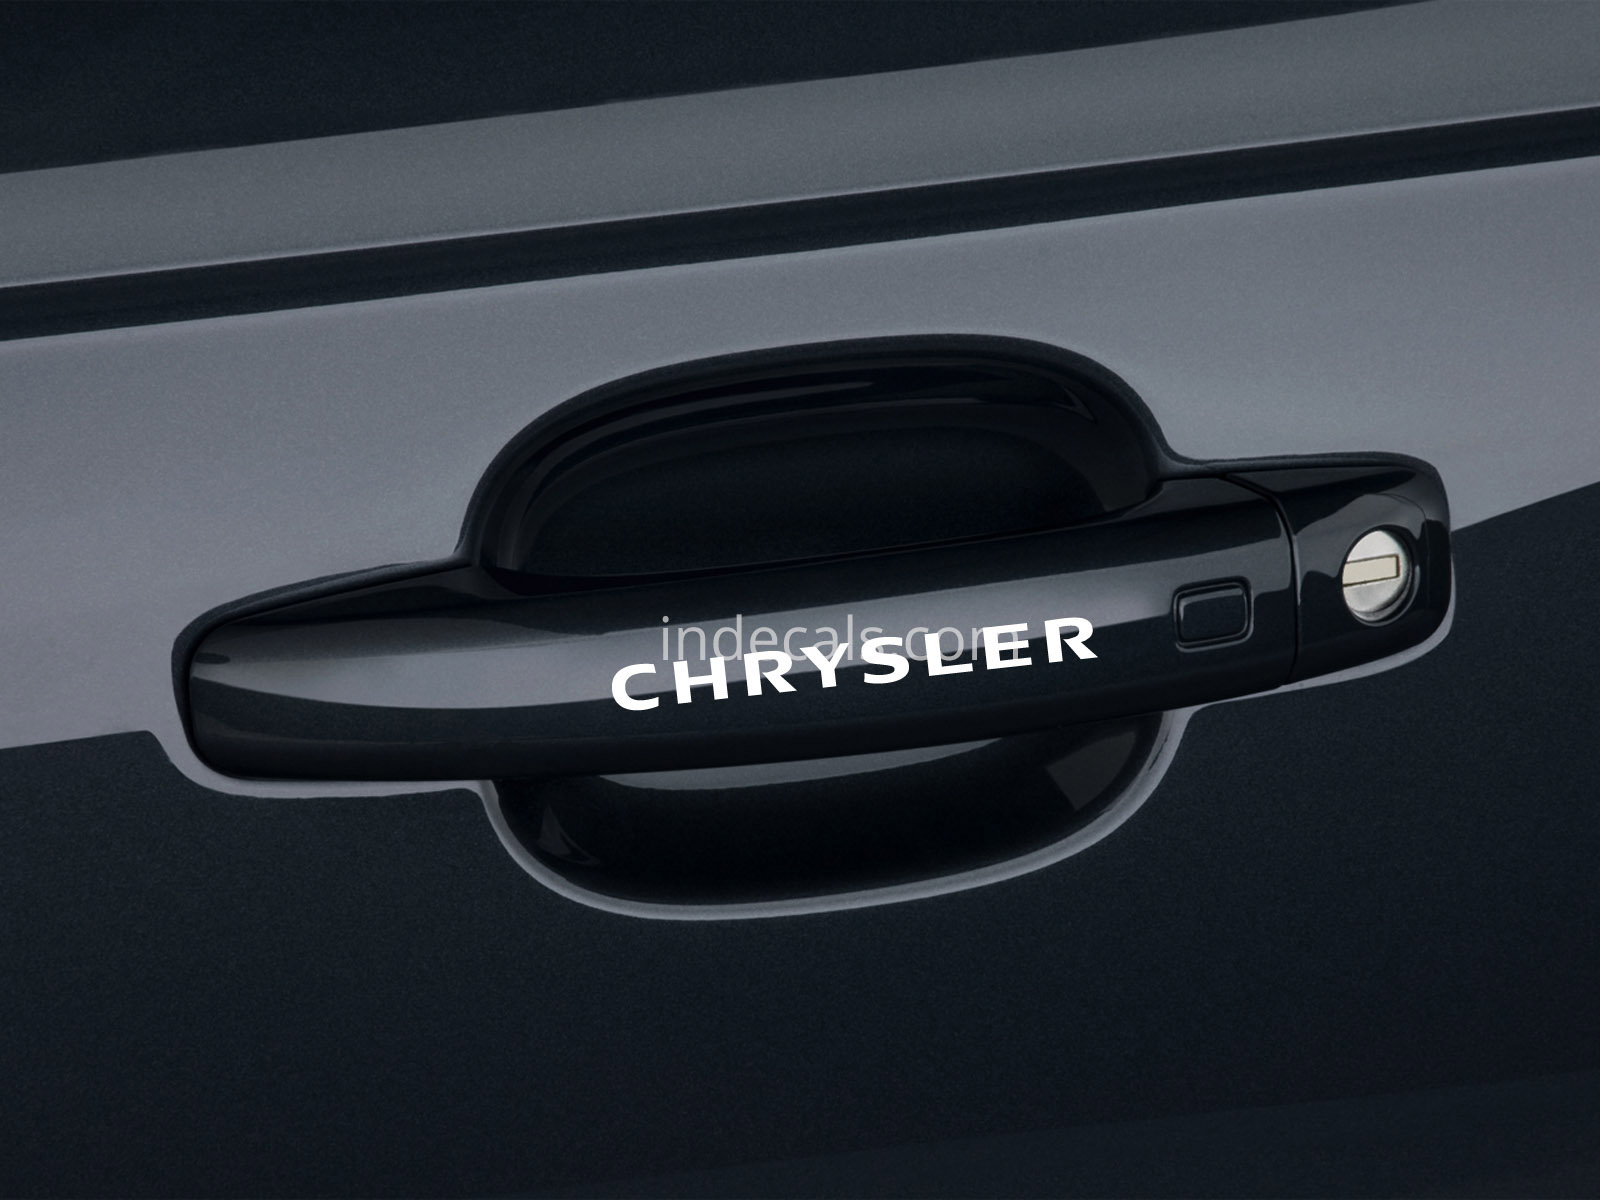 6 x Chrysler Stickers for Door Handles - White